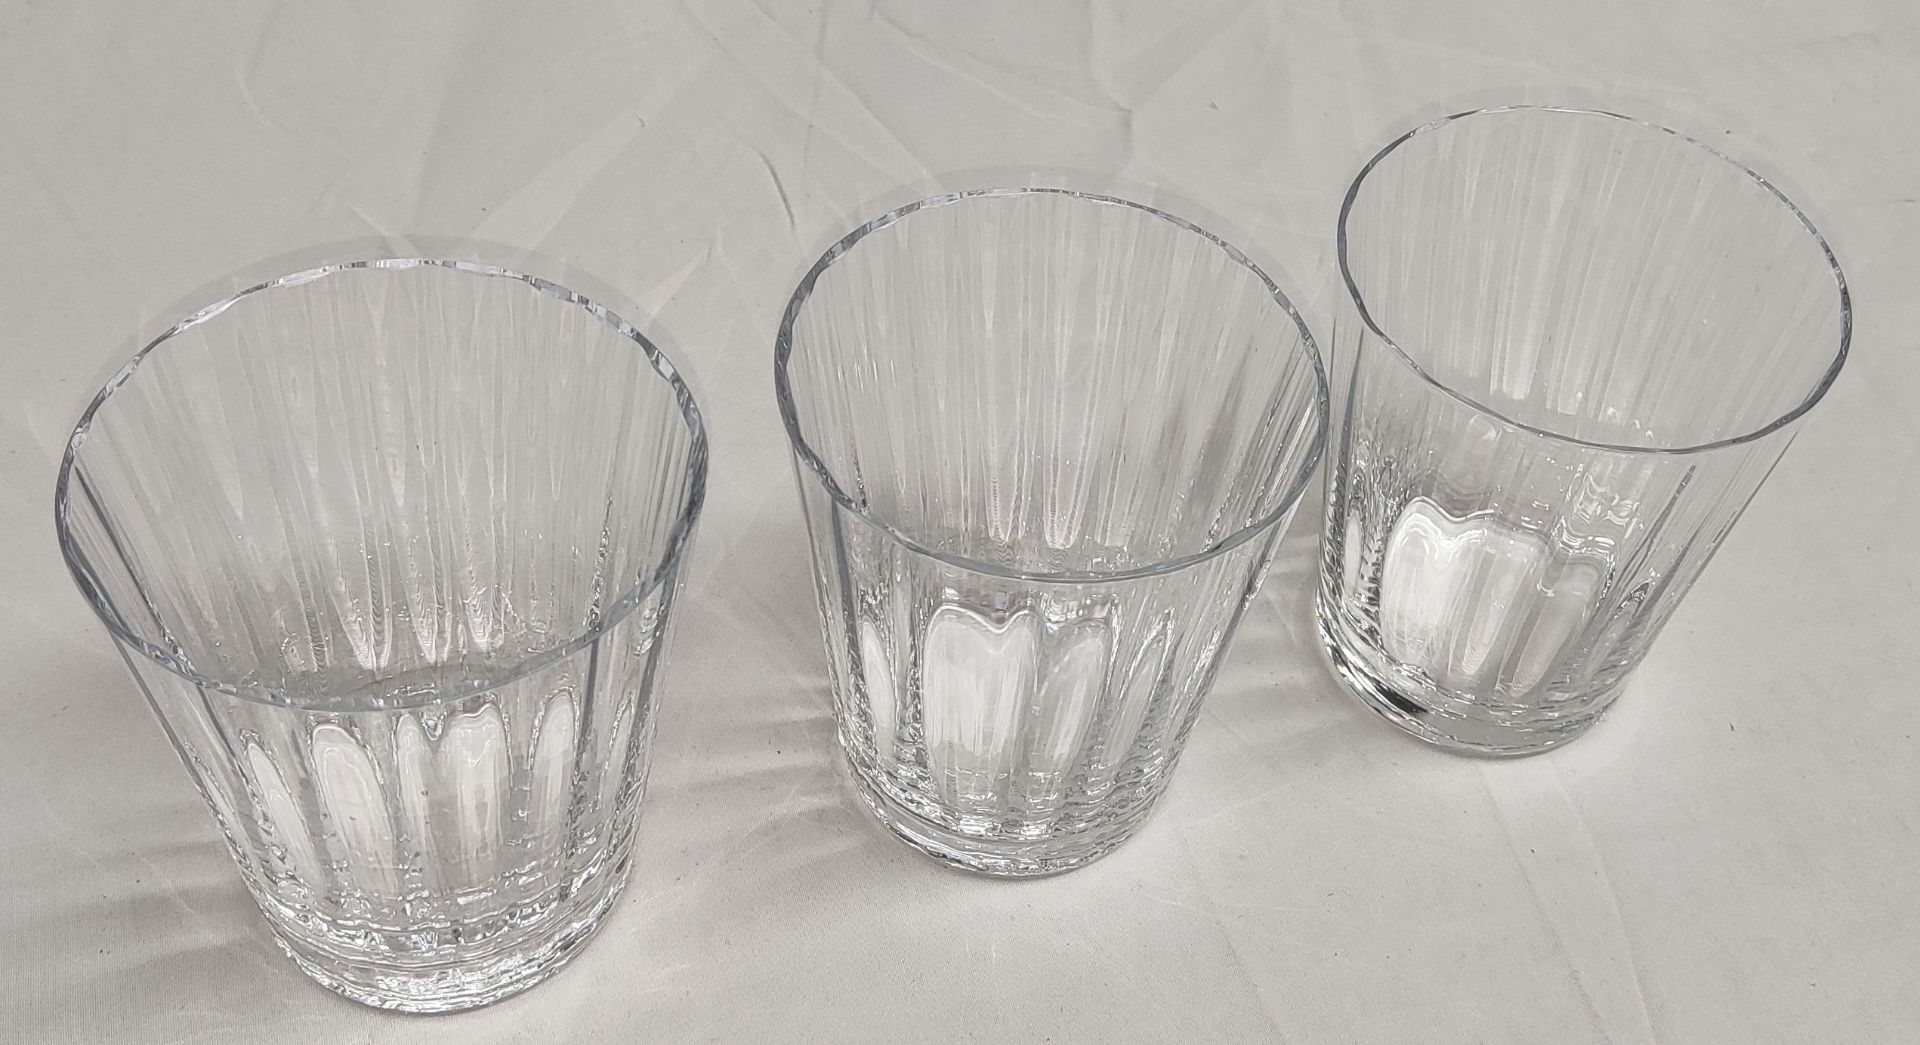 3 x SOHO HOME Pembroke Low Ball Glasses - New/Boxed - Original RRP £70 - Ref: 6909149/HJL368/C19/ - Image 4 of 11